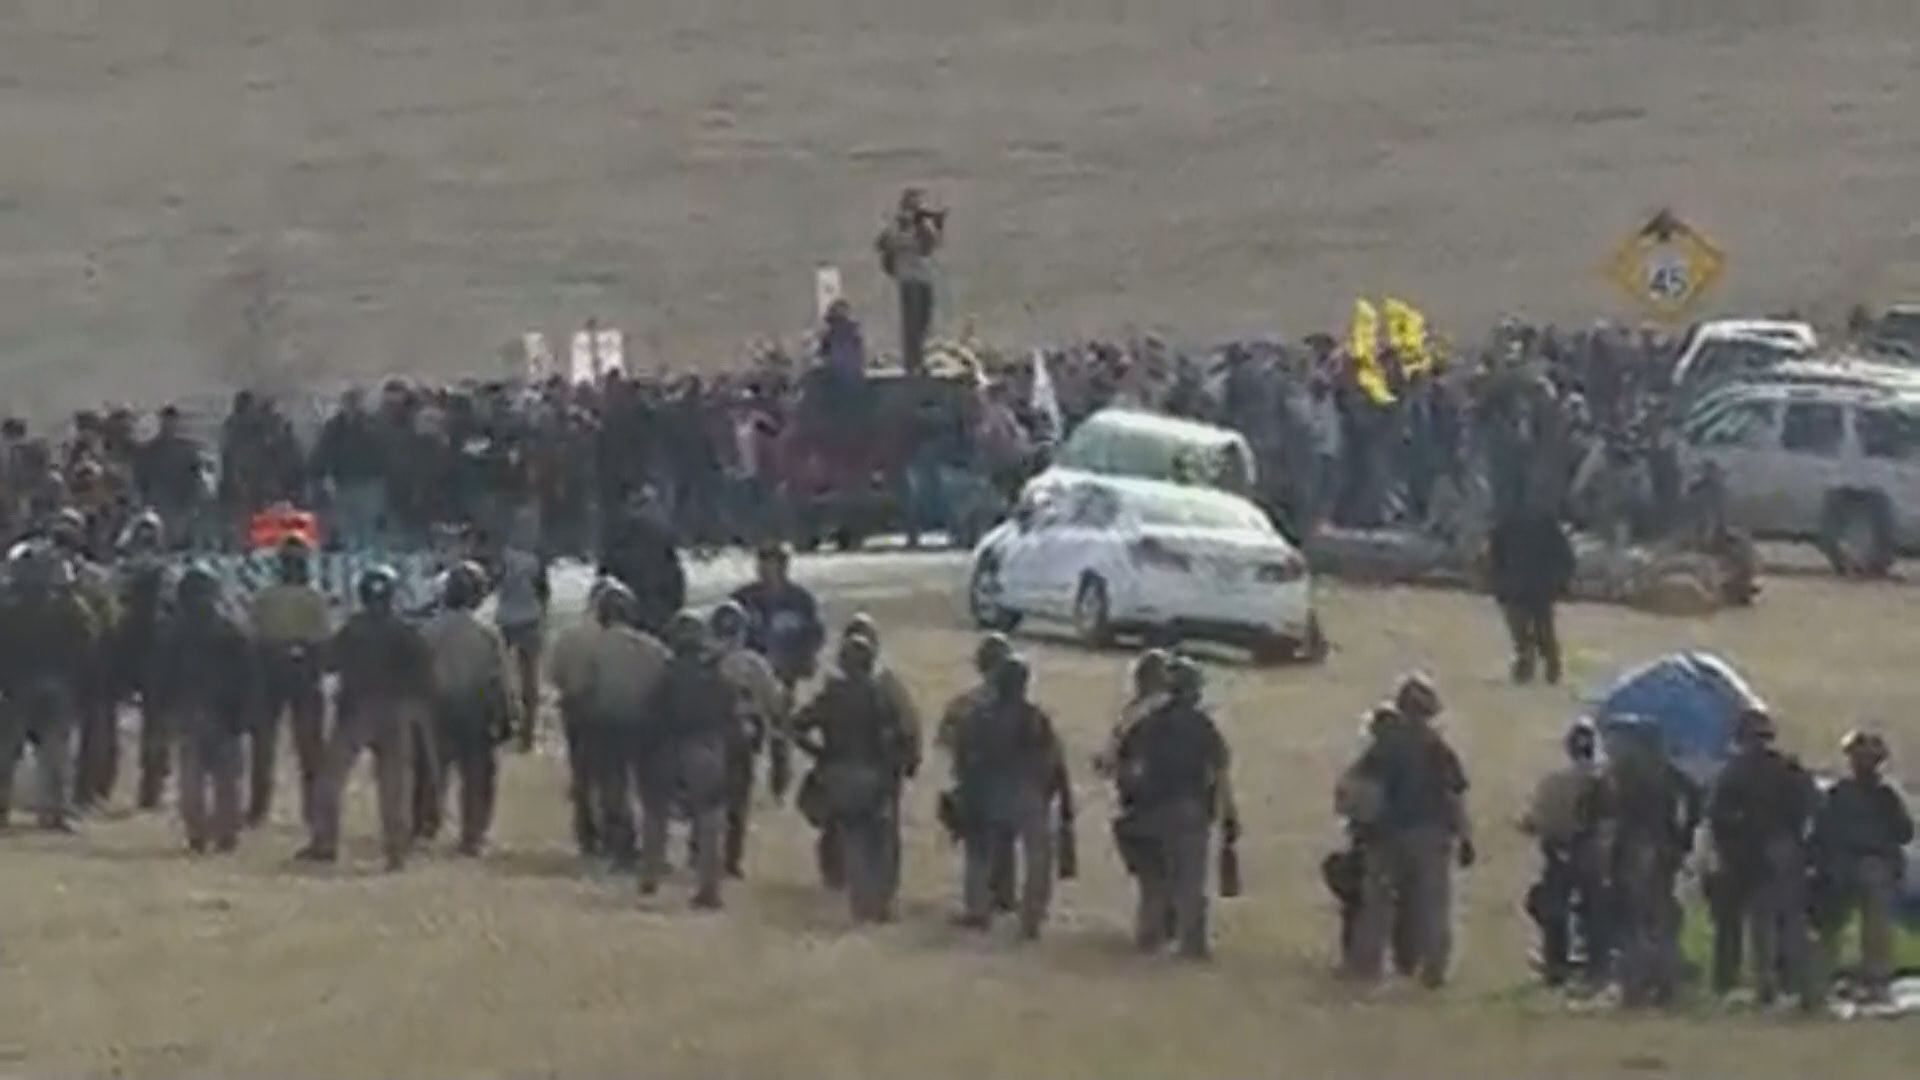 Arrests underway at Dakota Access pipeline protest